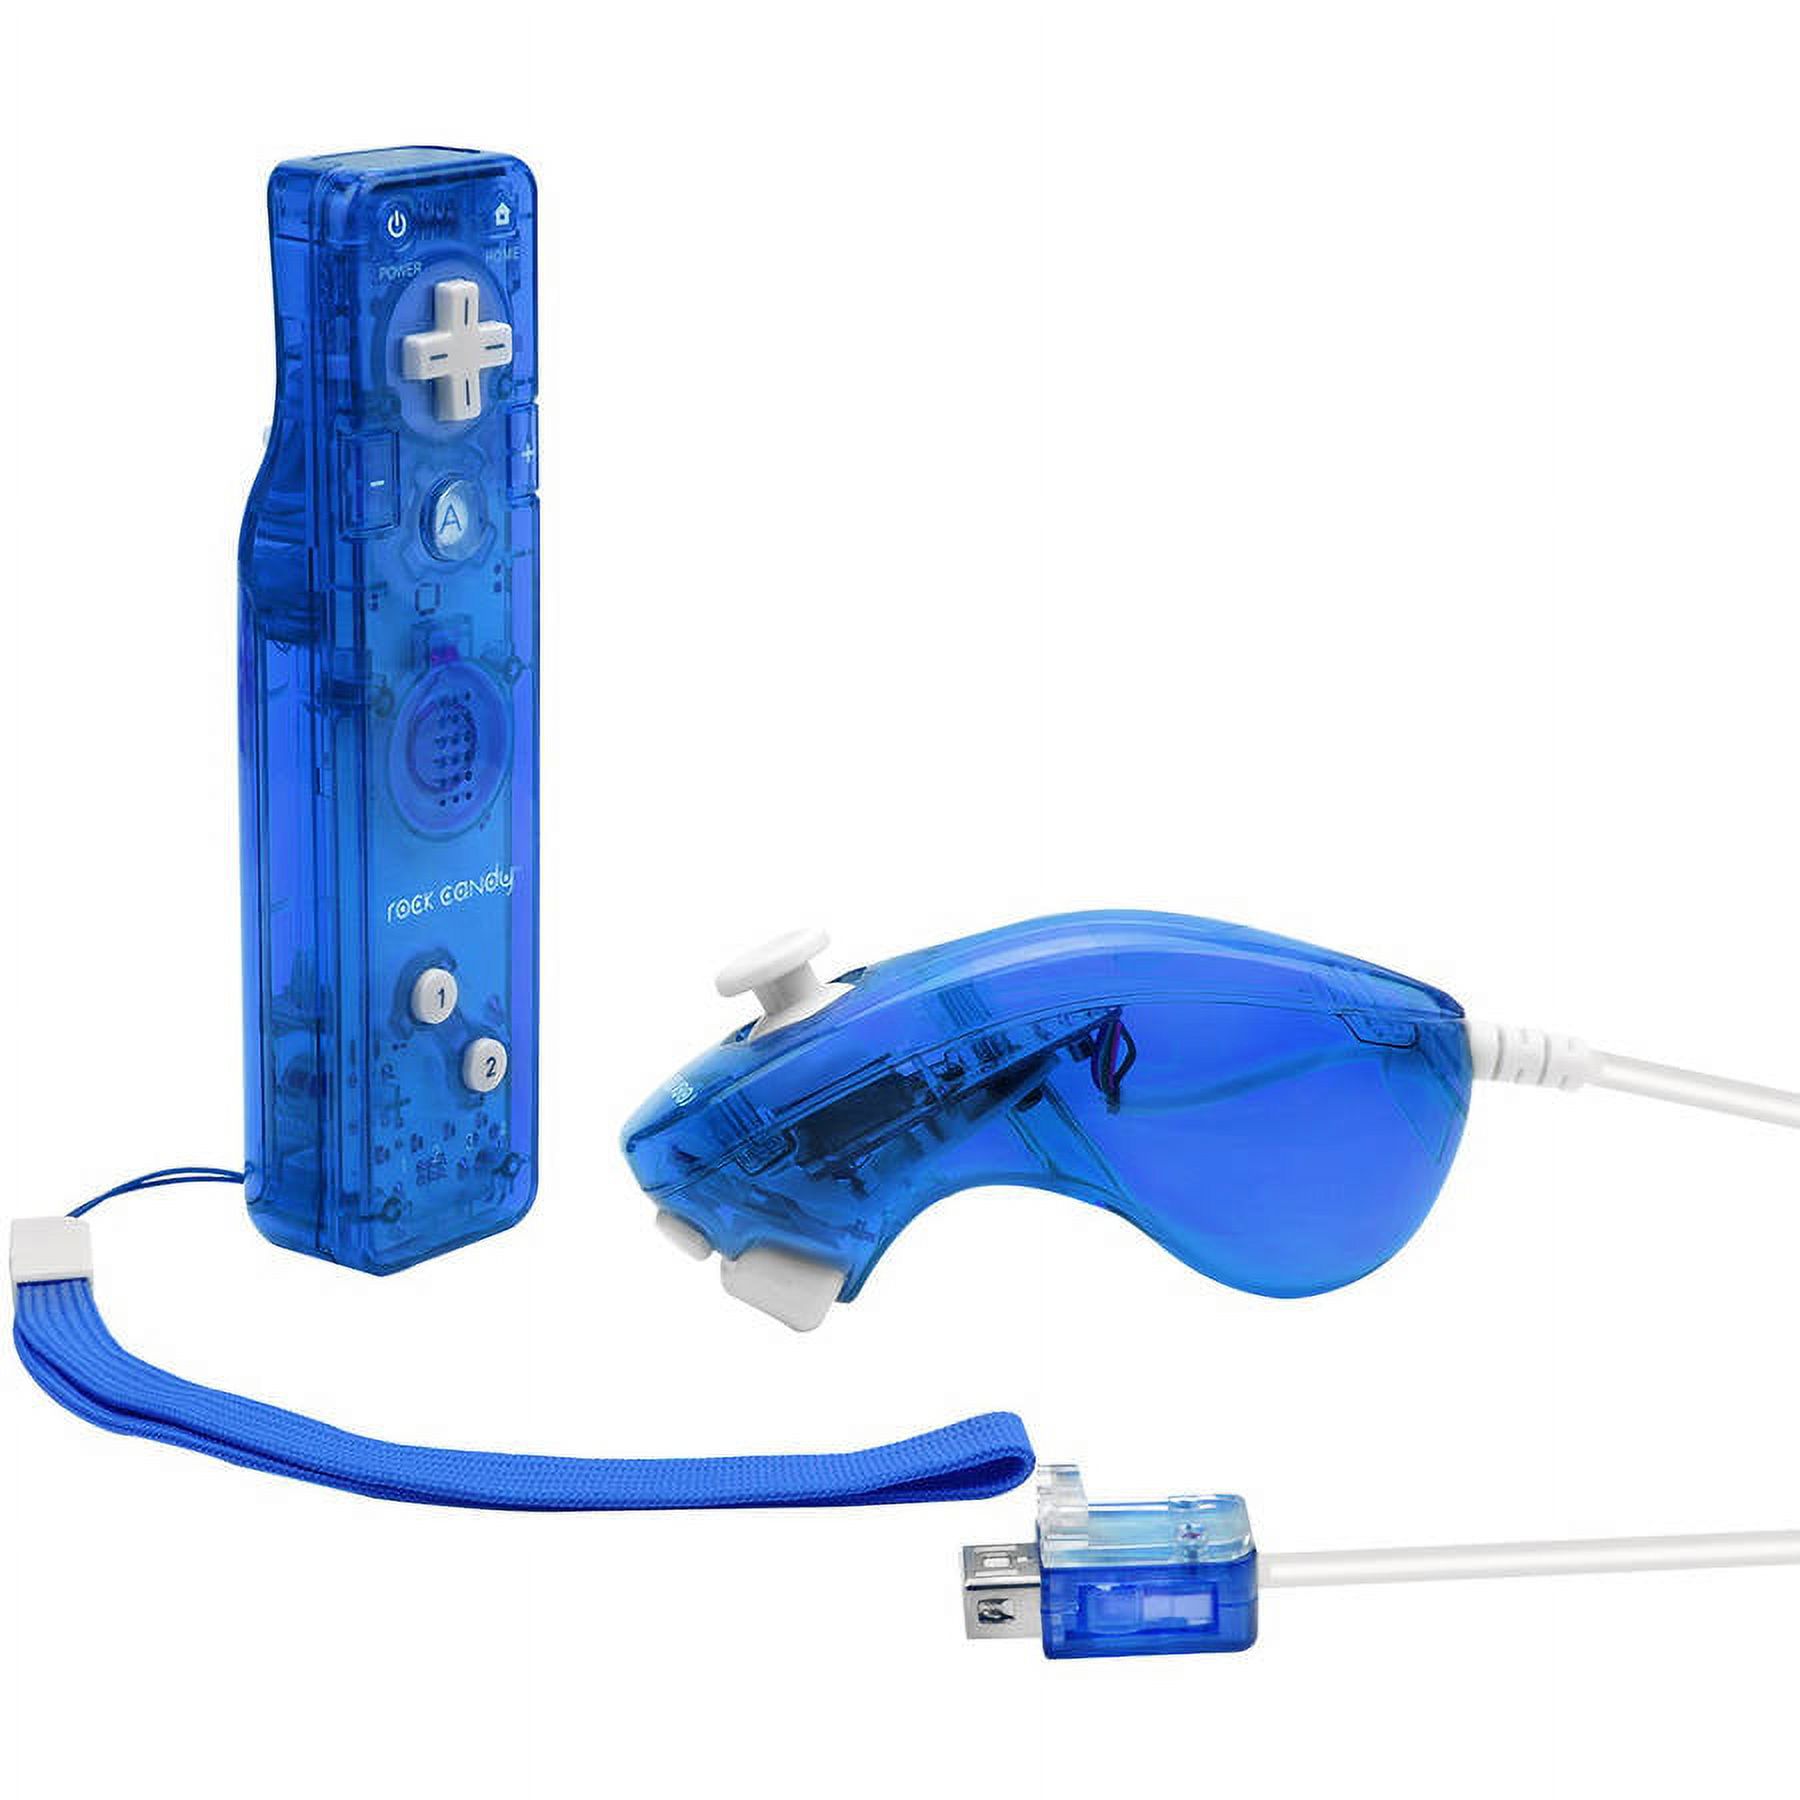 Rock Candy Wii Bundle (blue - Na) - image 3 of 3